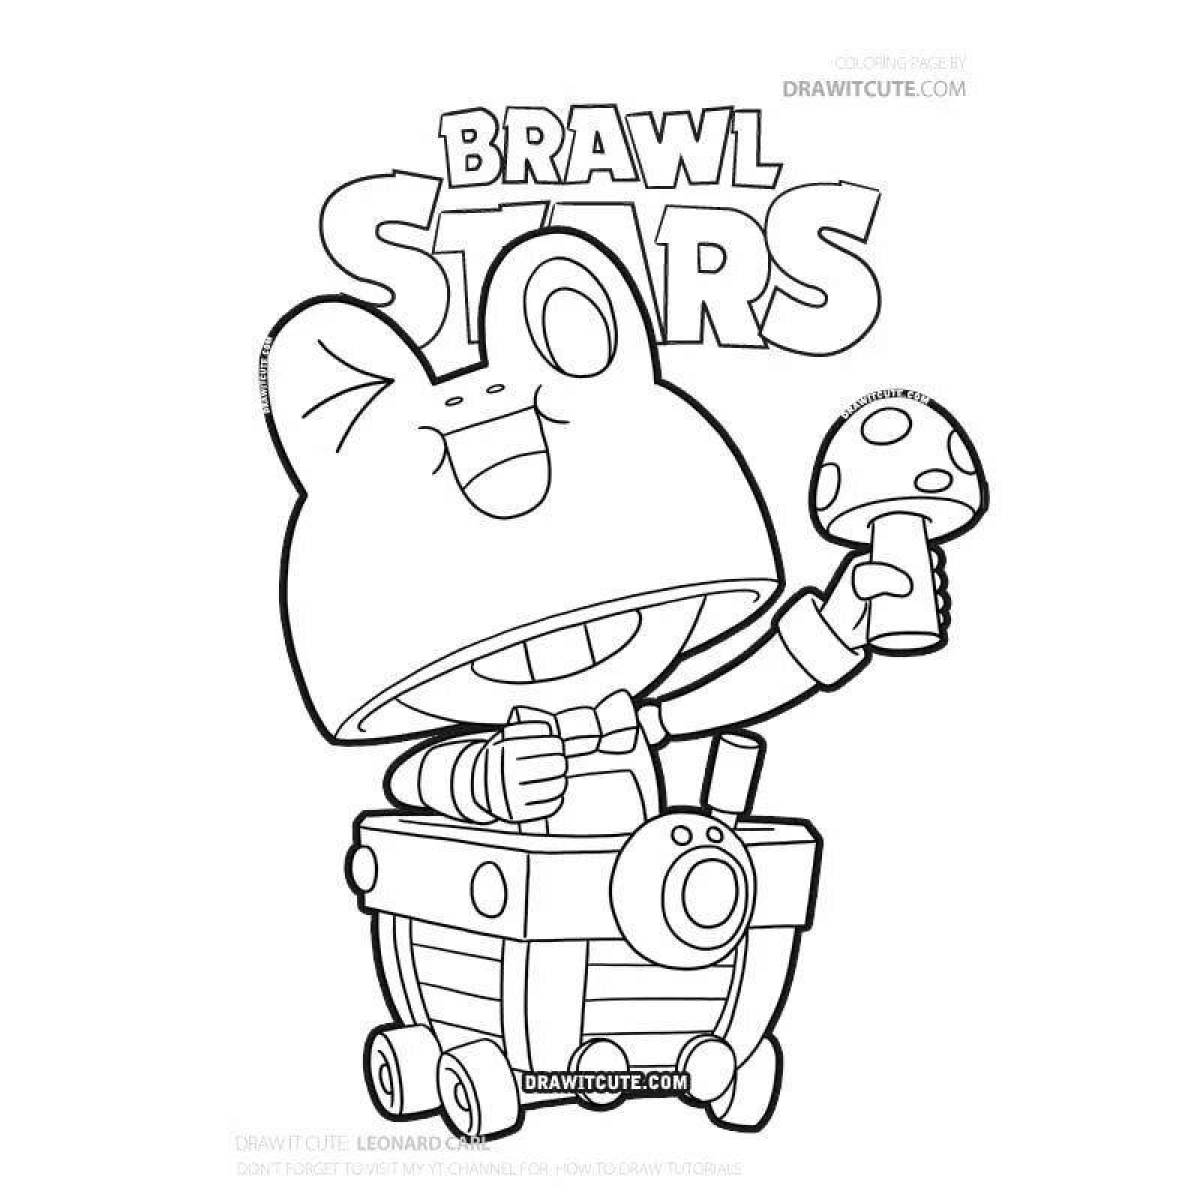 Bravo stars checkmark shiny coloring page